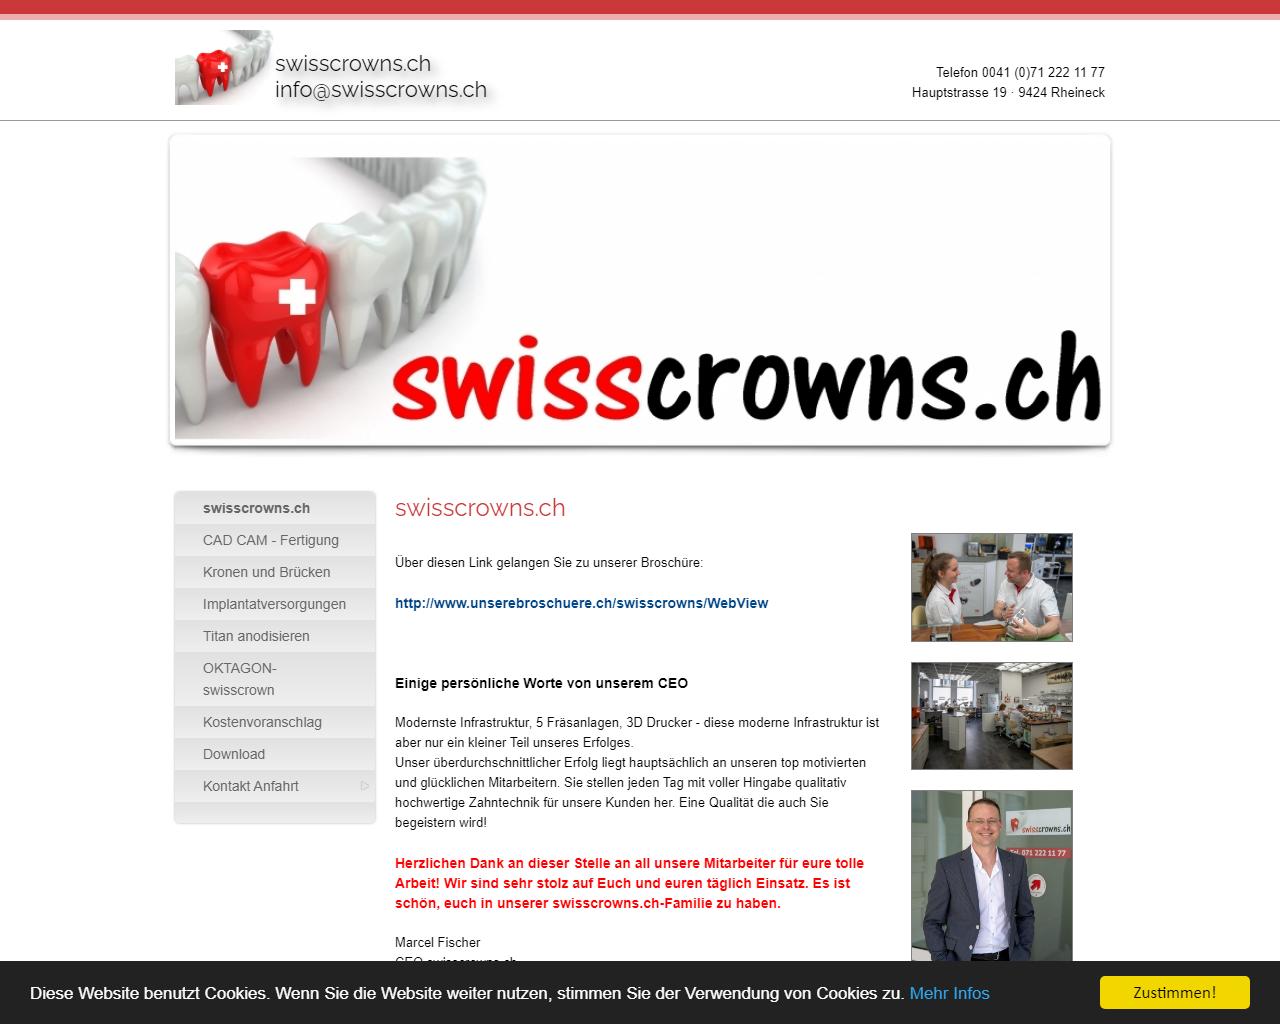 swisscrowns.ch<br> Marcel Fischer